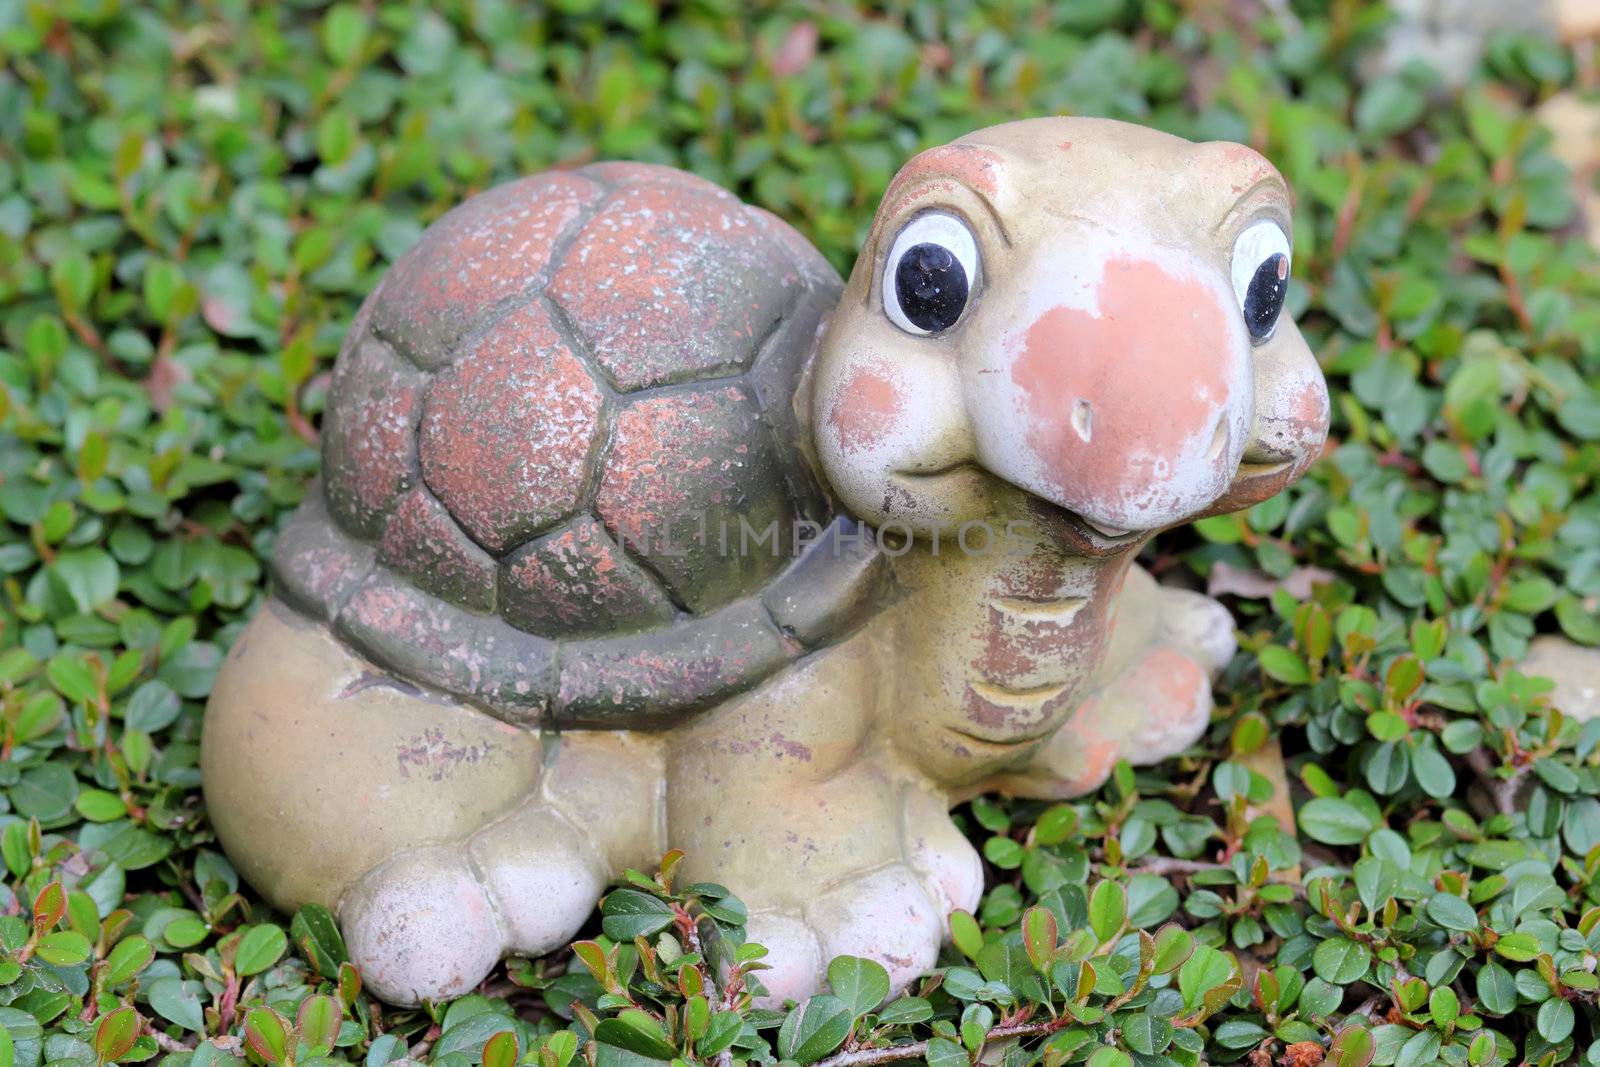 Nice decorative turtle figurine in spring garden